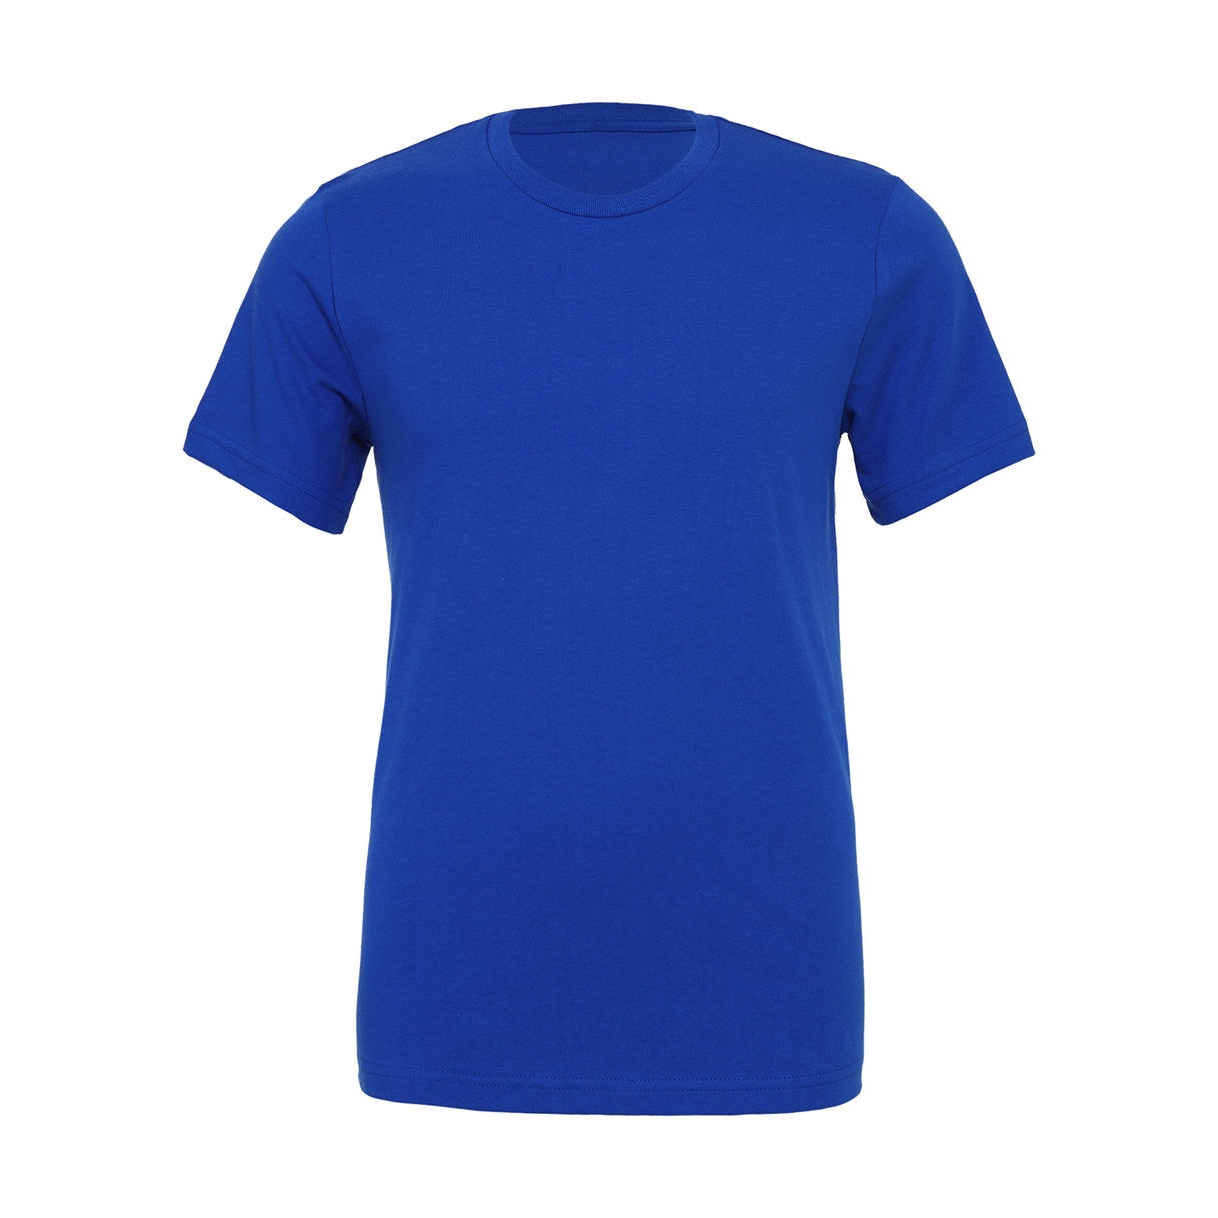 Tričko Bella Jersey - modré, XL